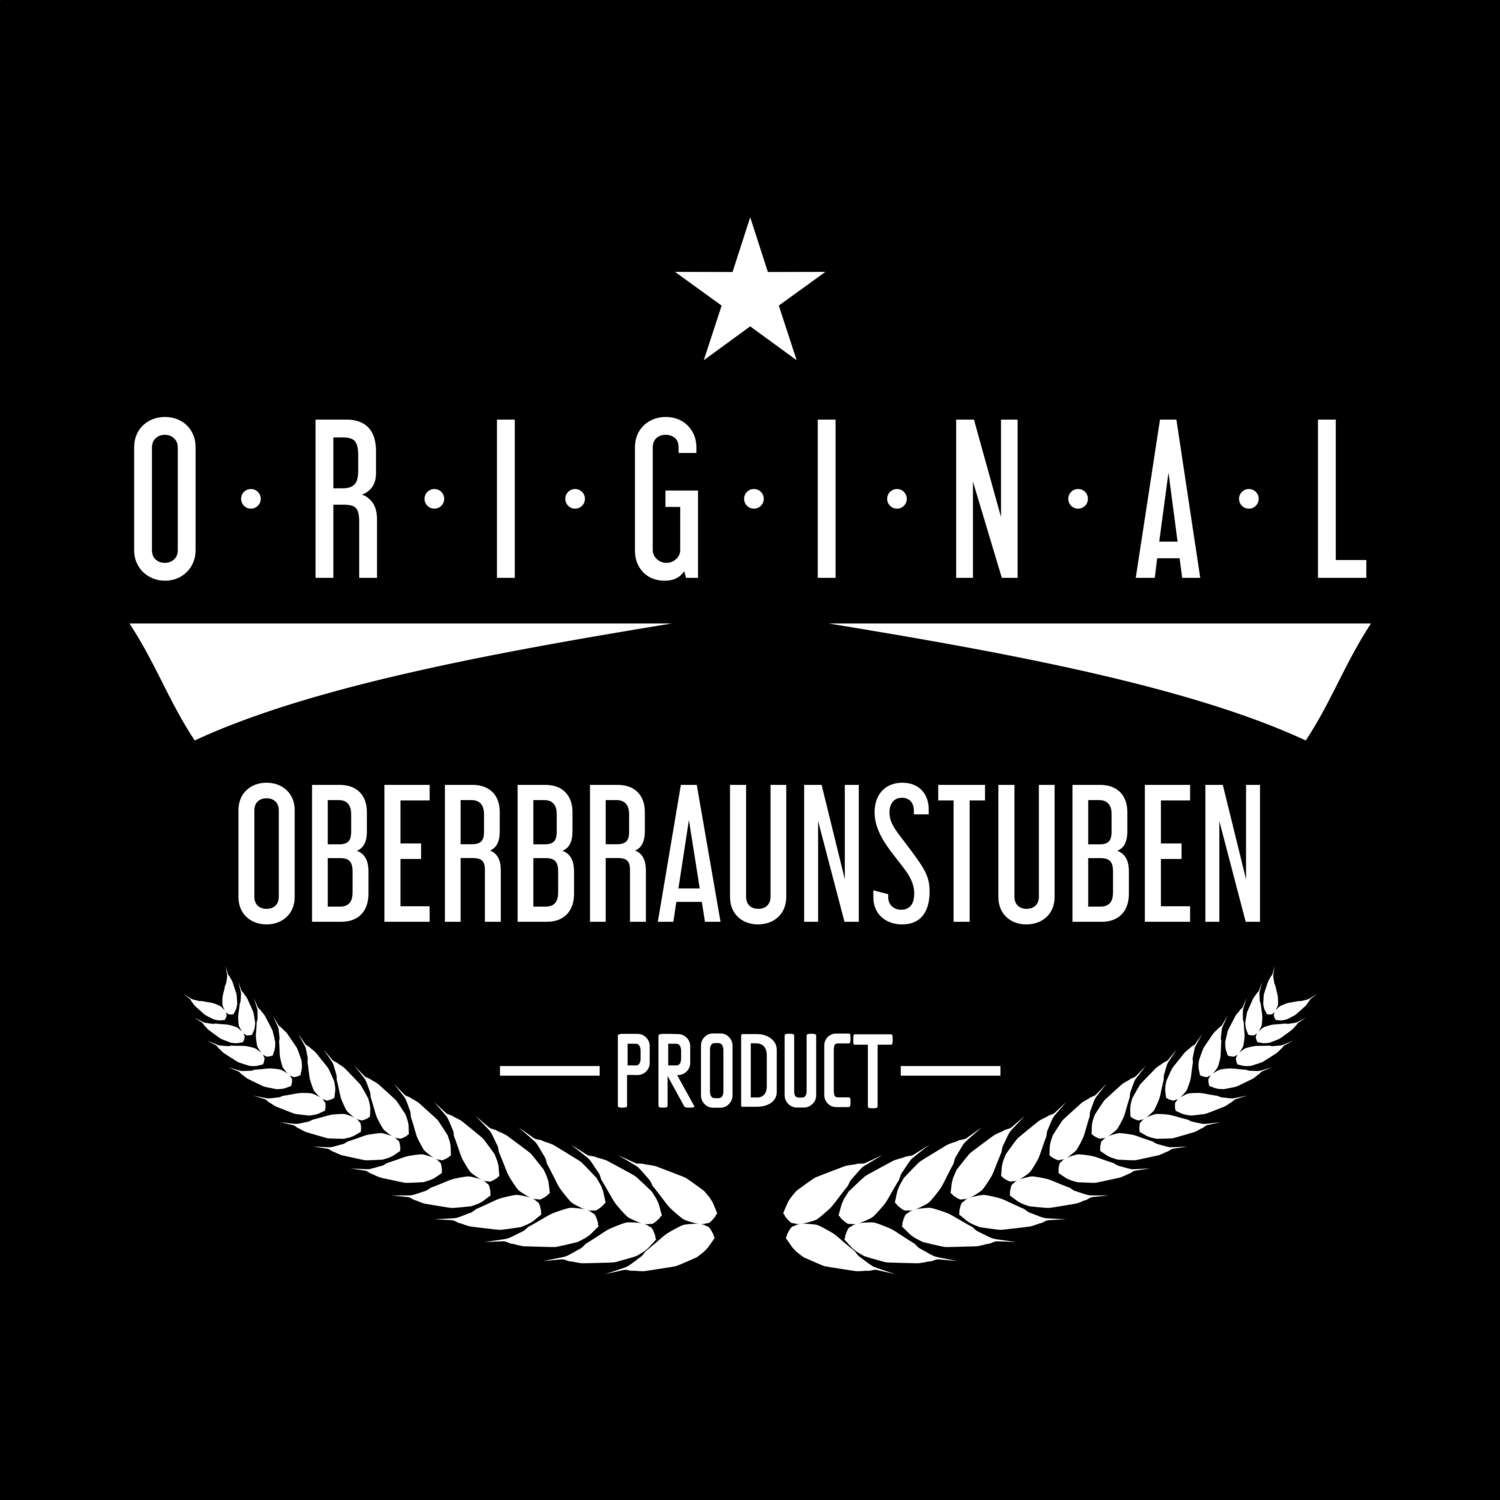 Oberbraunstuben T-Shirt »Original Product«